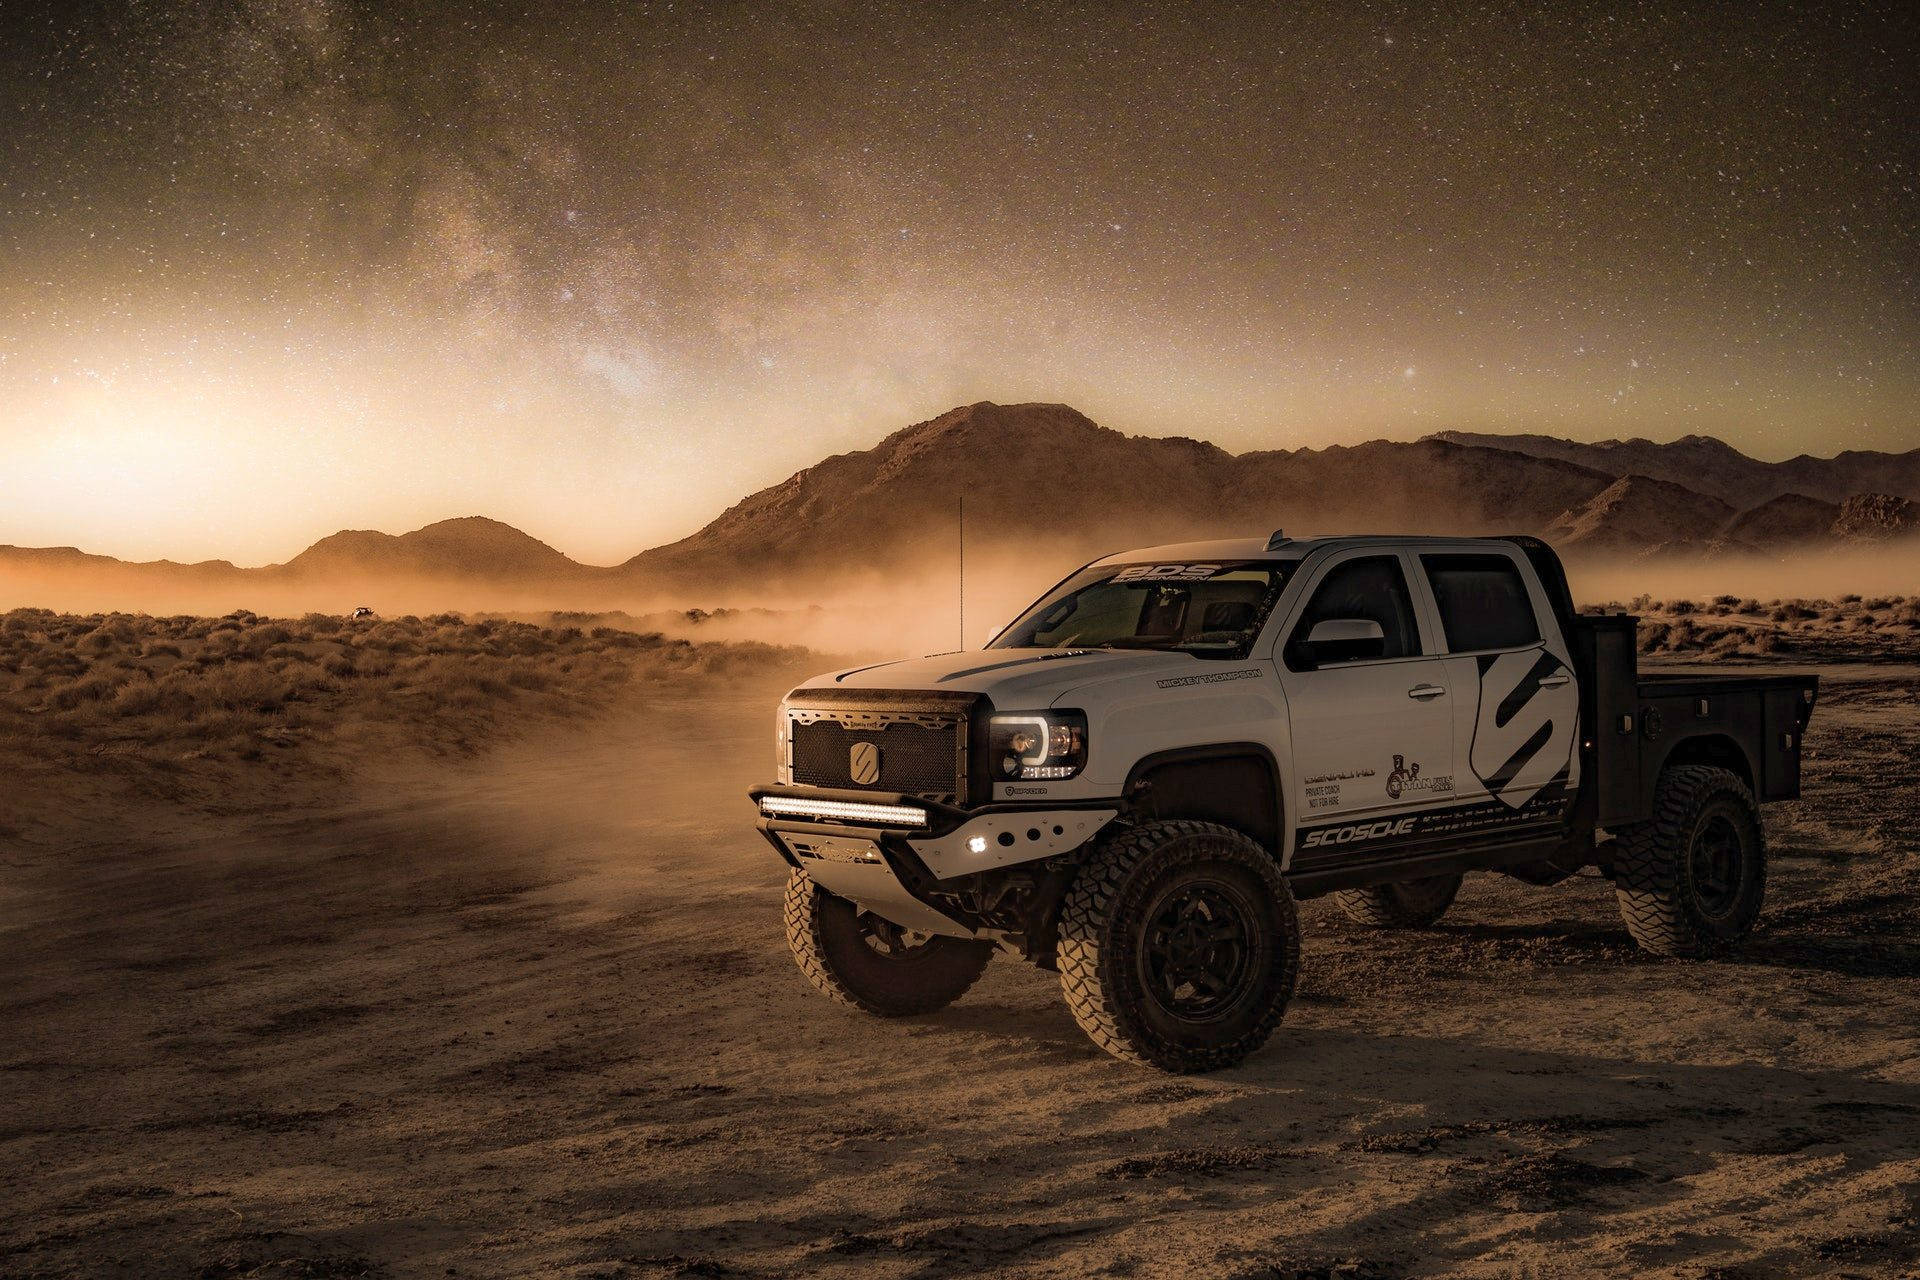 Cool Truck In Smokey Desert Background